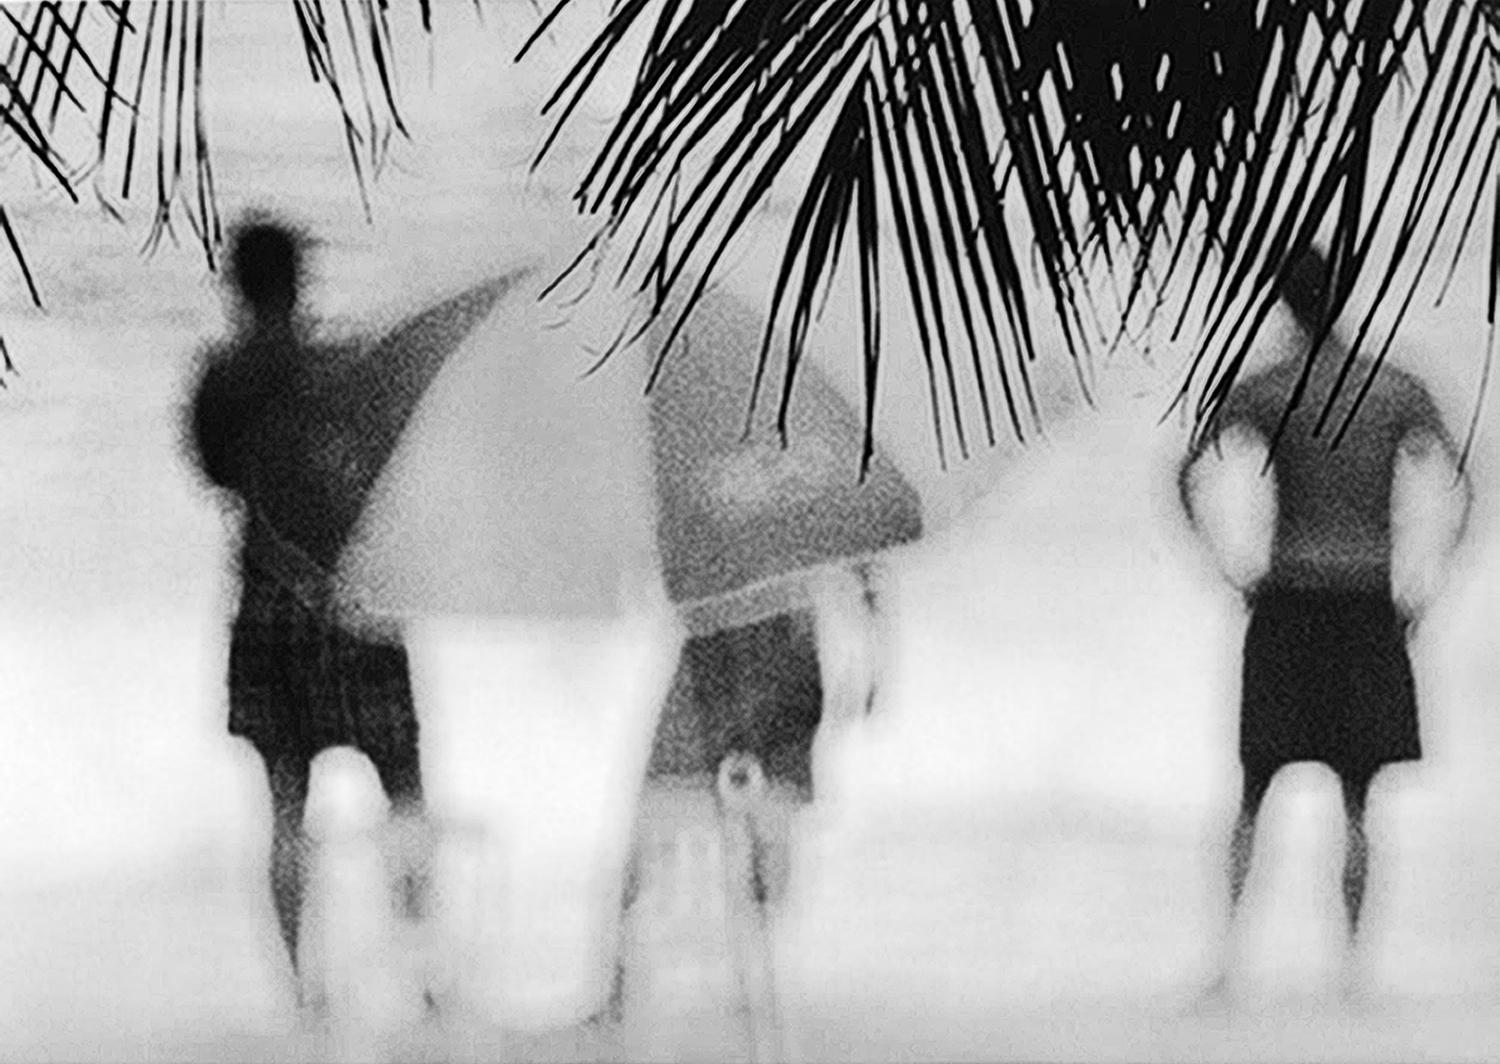 Black and White Photograph Barnaby Hall - Surfistas de Rio de Janiero, Brésil 